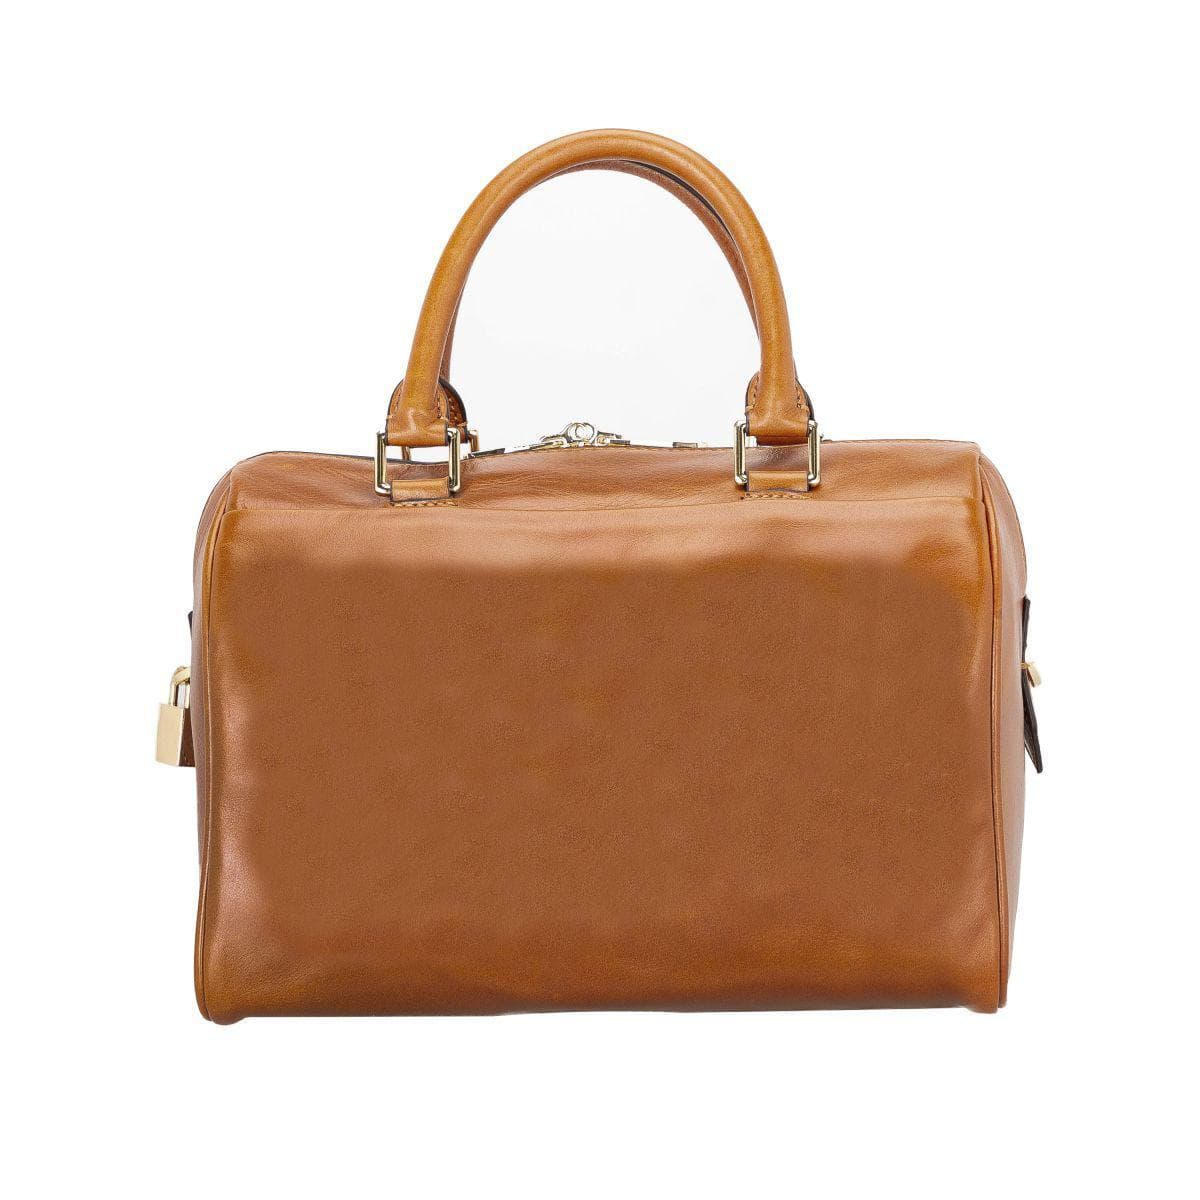 Shine Women's Leather Handbags Tan Bouletta Shop